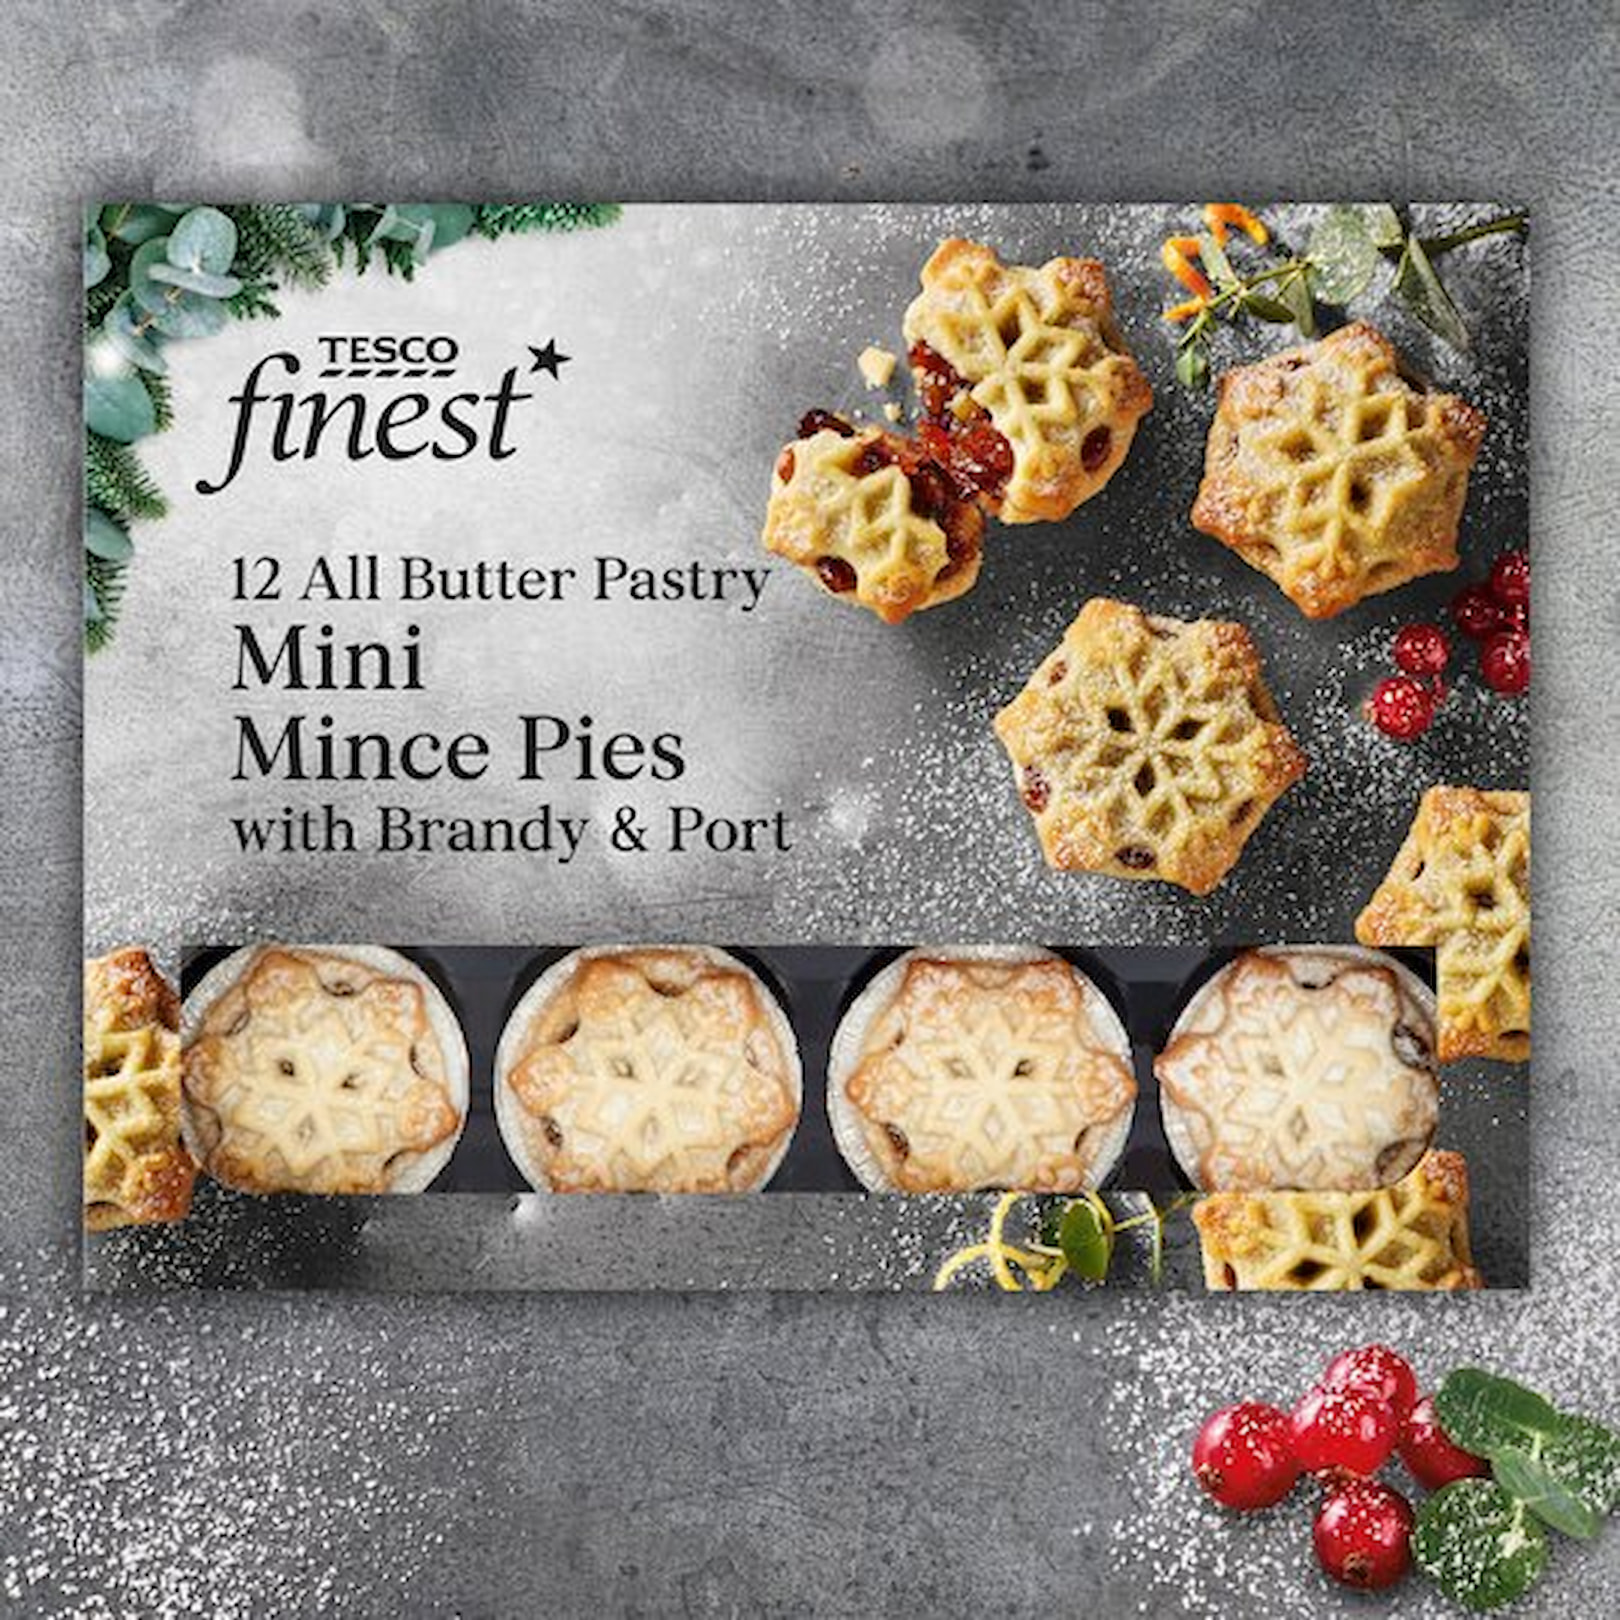 Tesco Finest Mini Mince Pie Review 2021